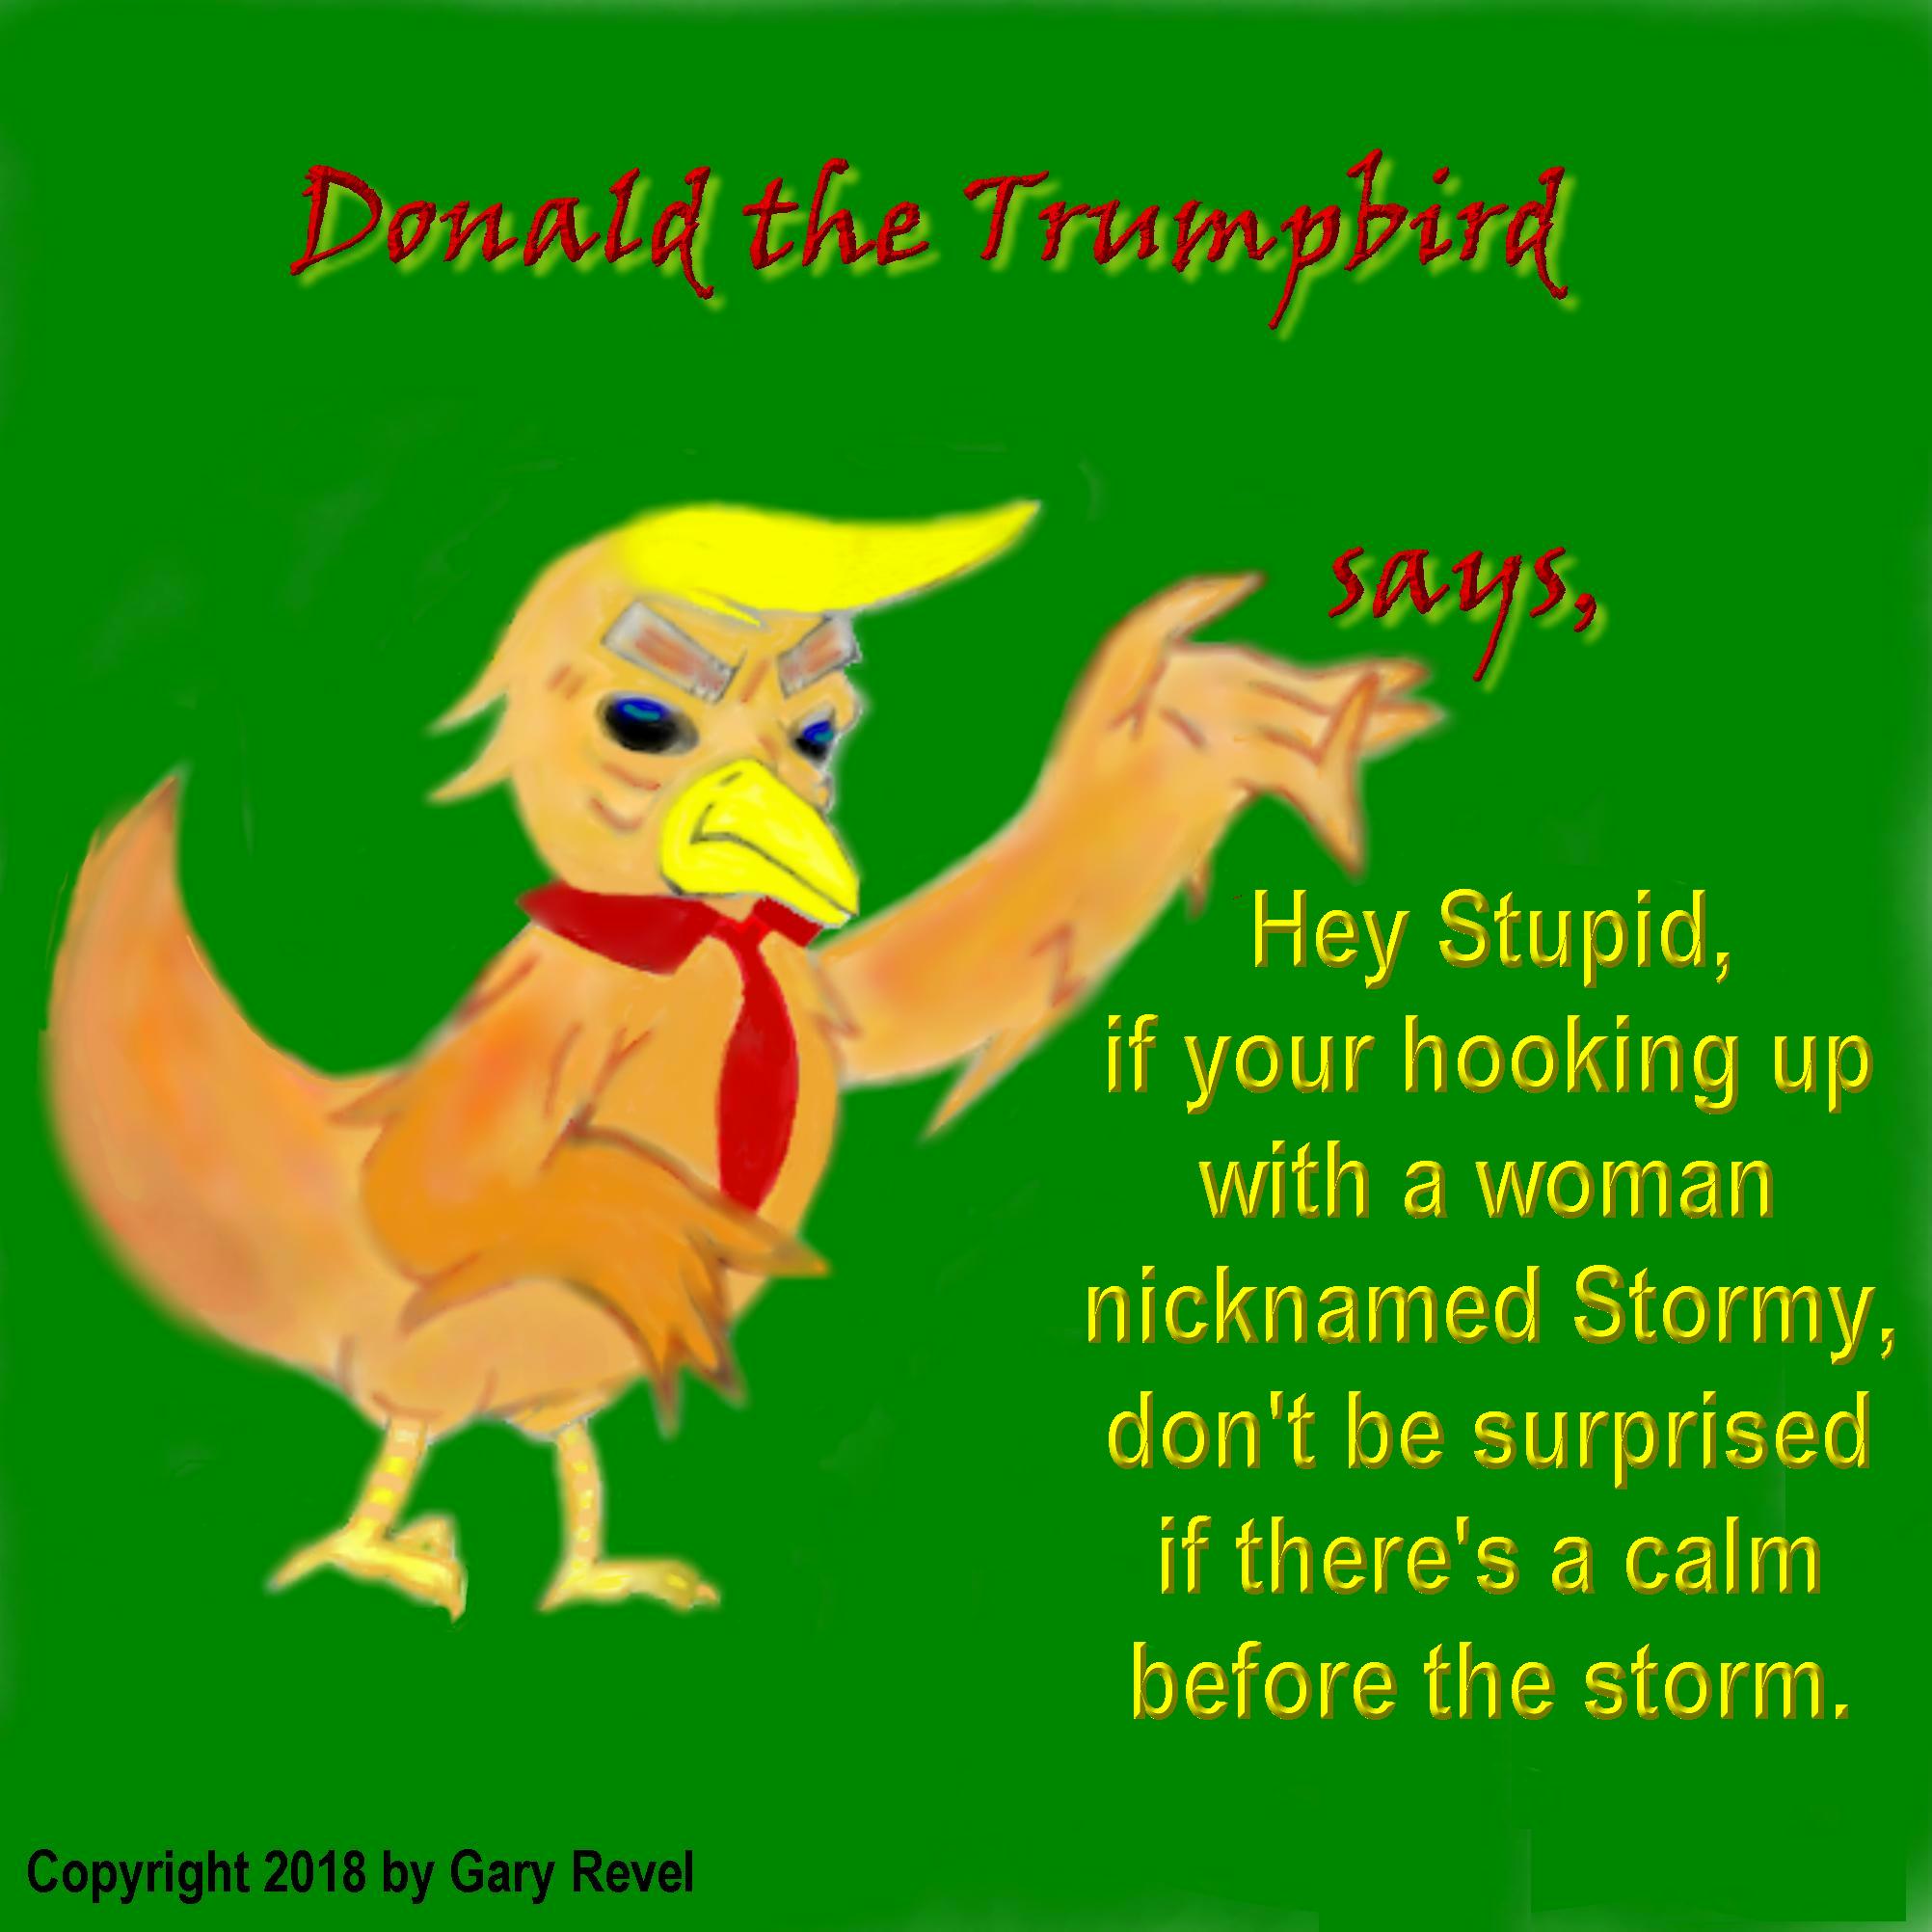 Donald the Trumpbird says stormy